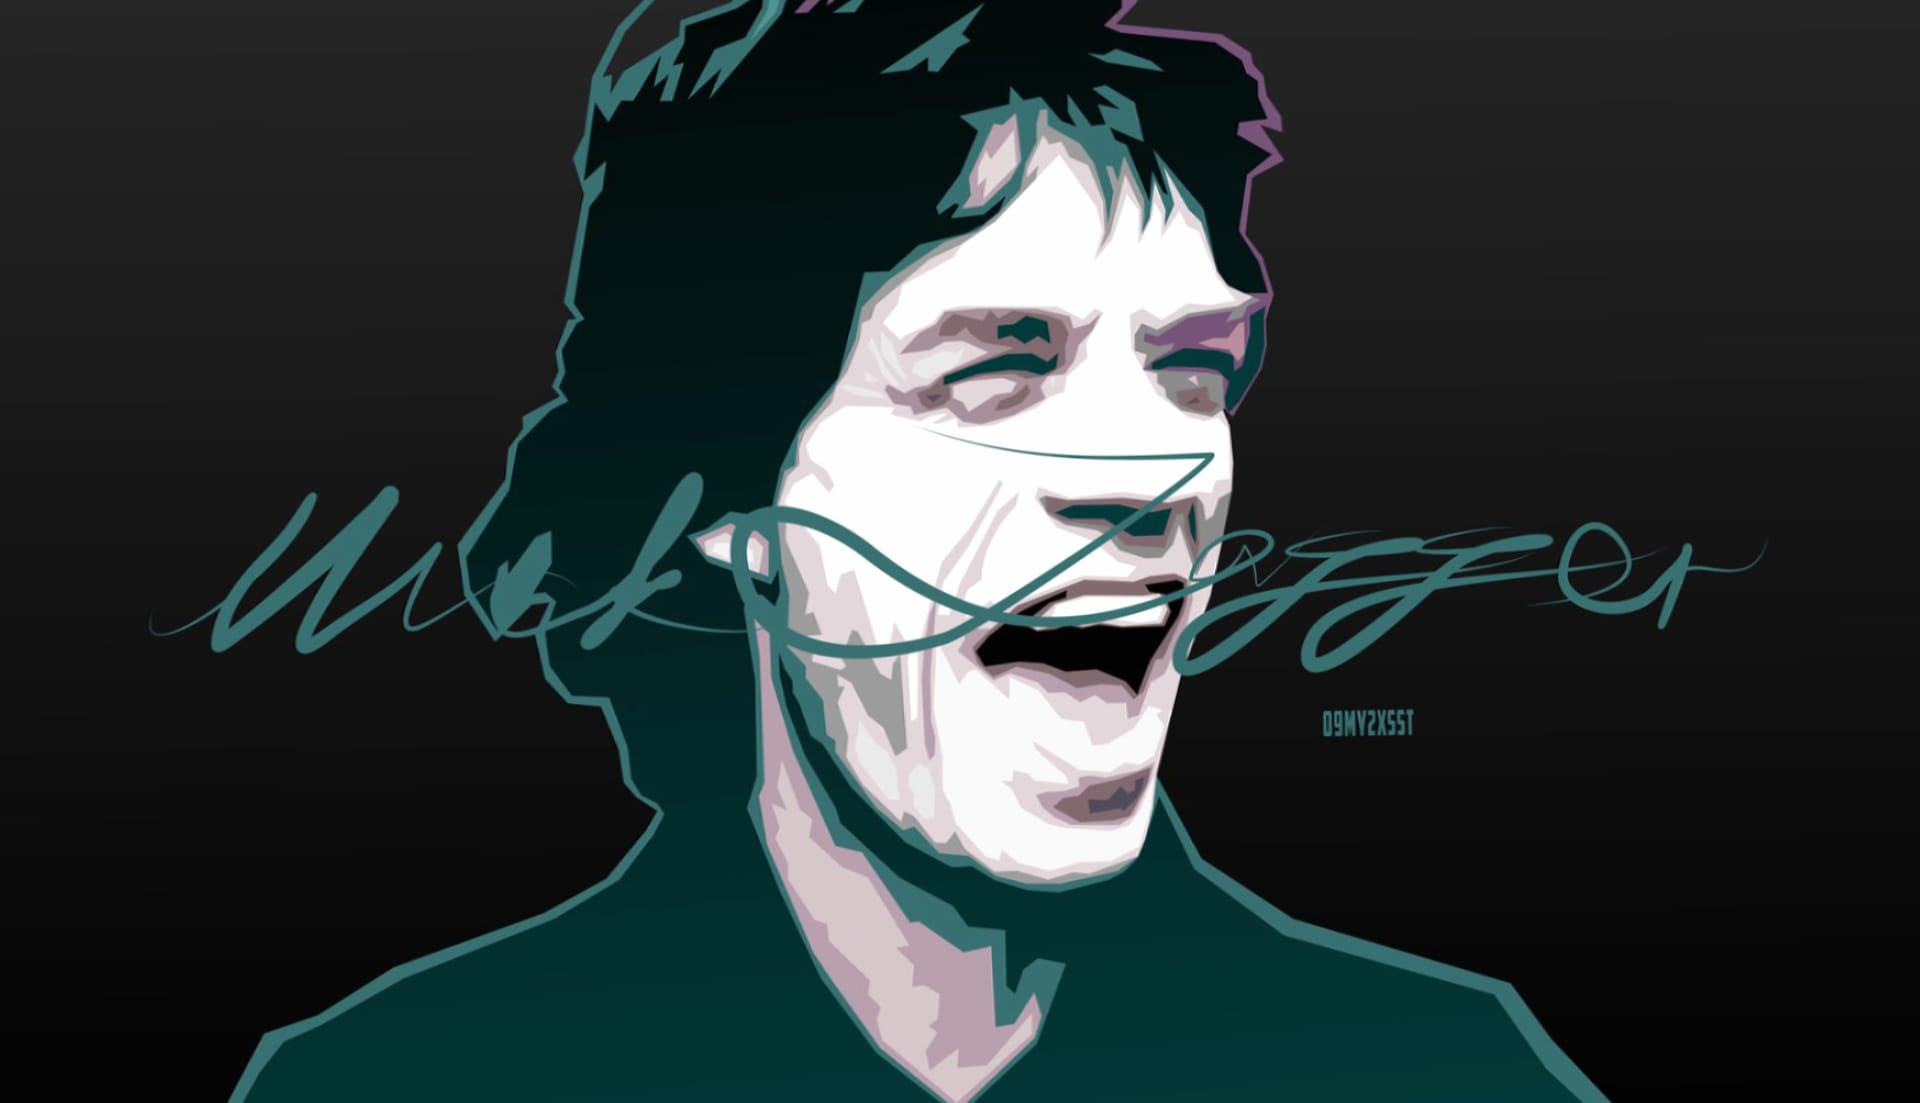 Mick Jagger at 2048 x 2048 iPad size wallpapers HD quality